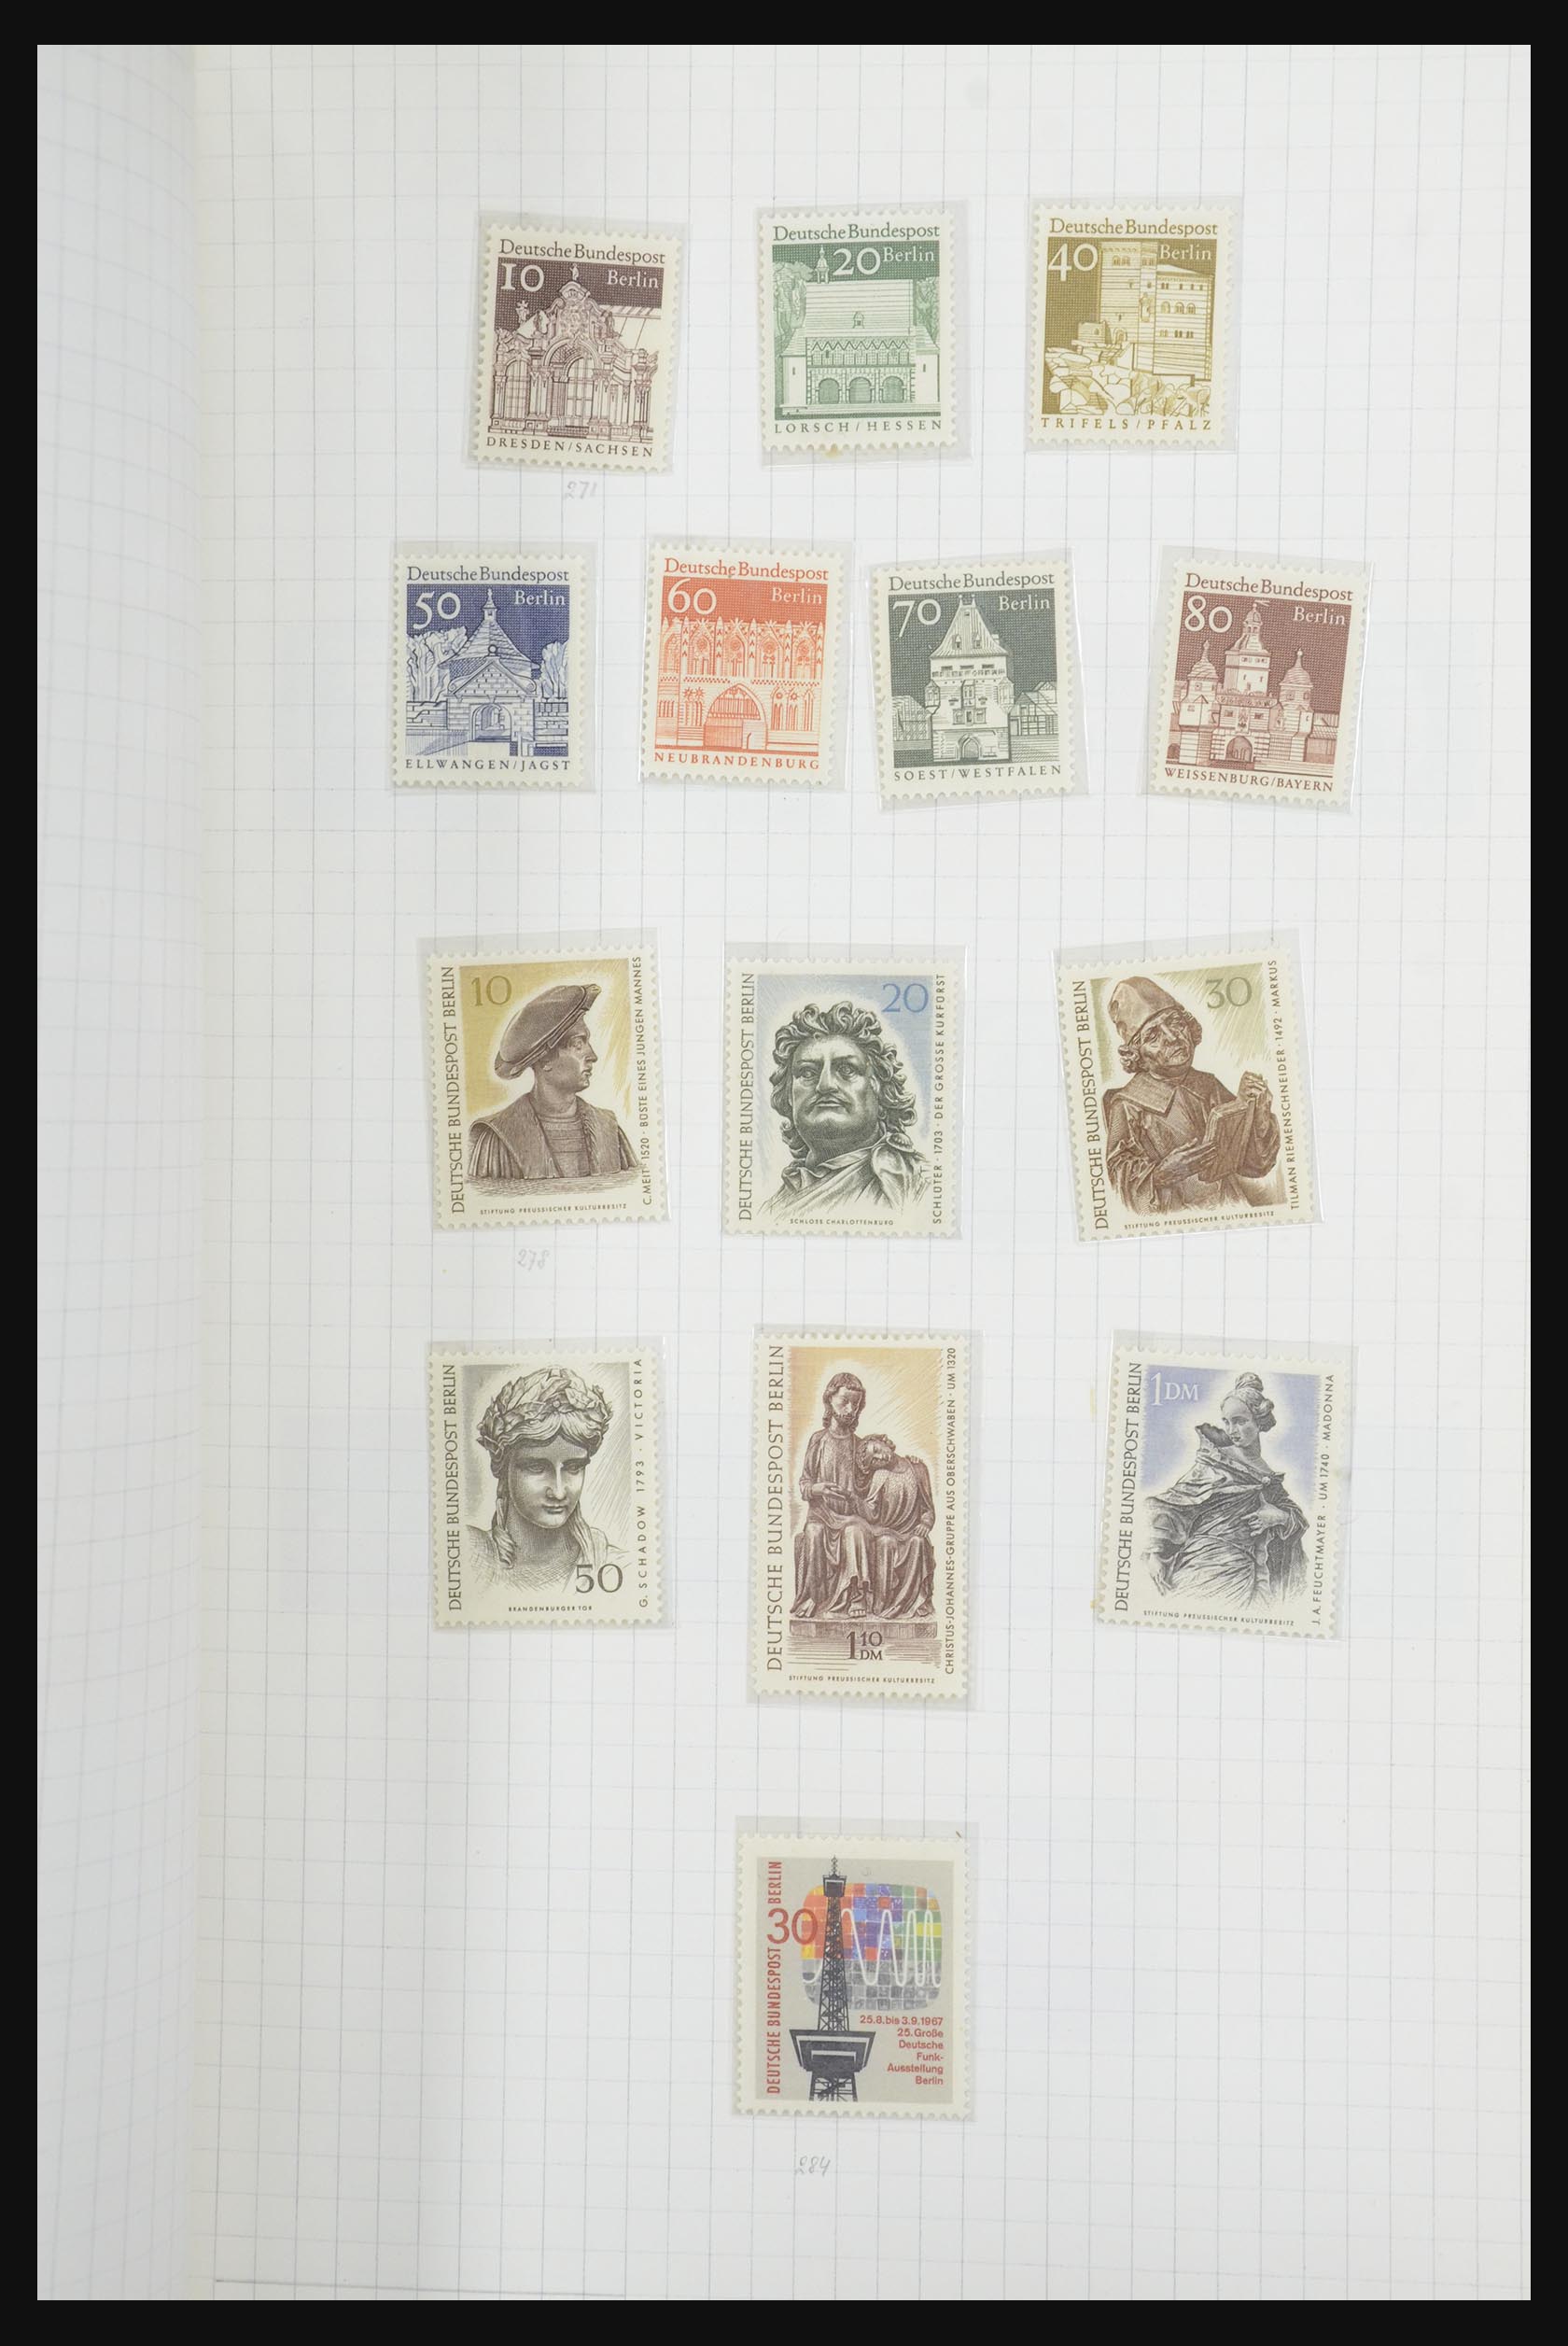 32398 165 - 32398 Bundespost and Berlin 1948-1984.